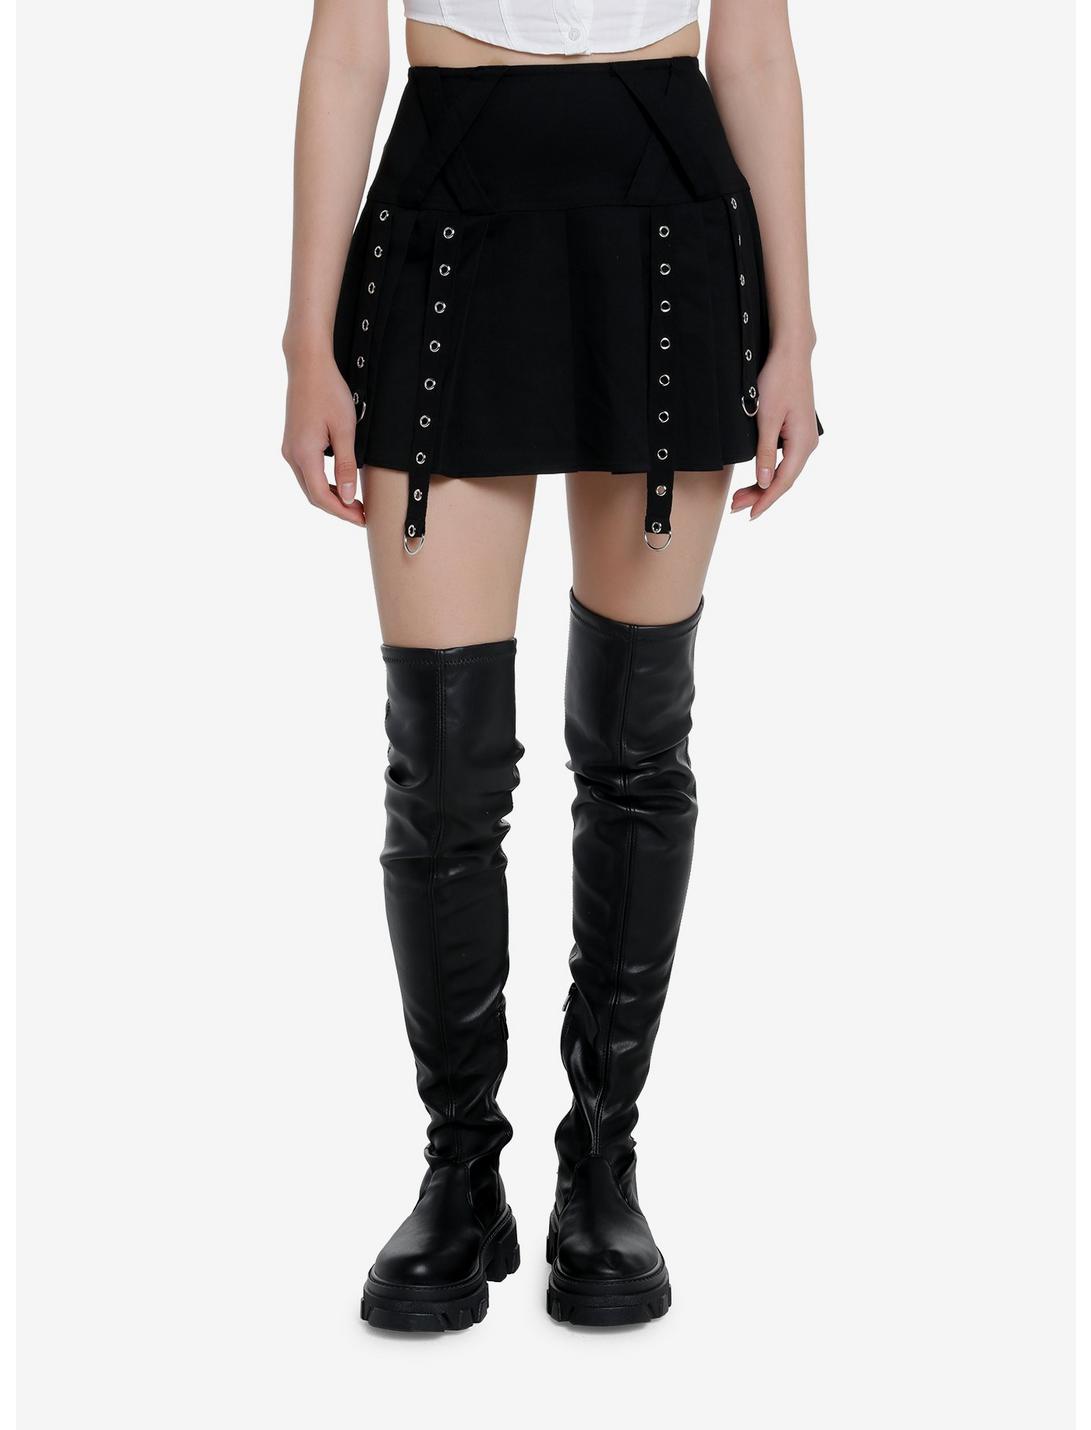 Social Collision Black Grommet Pleated Skirt, BLACK, hi-res